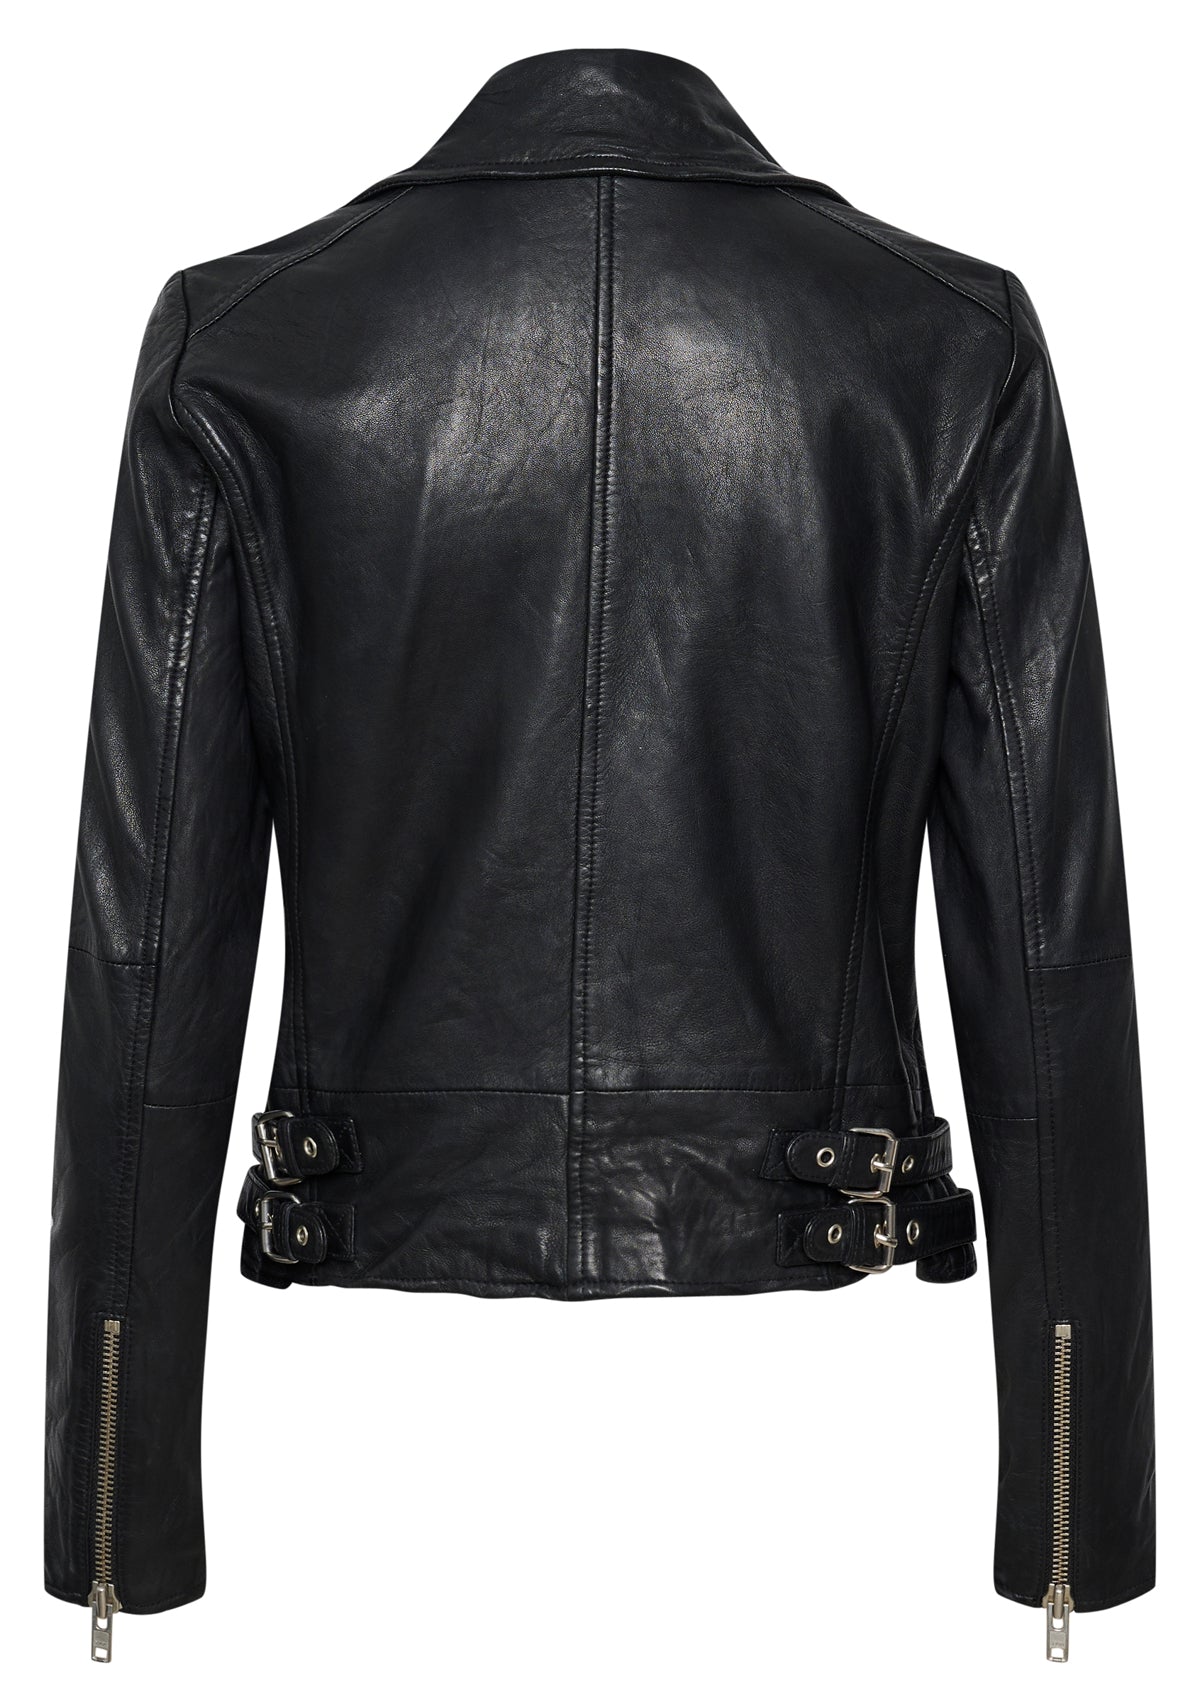 My Essential Wardrobe 02 The Leather Jacket Black